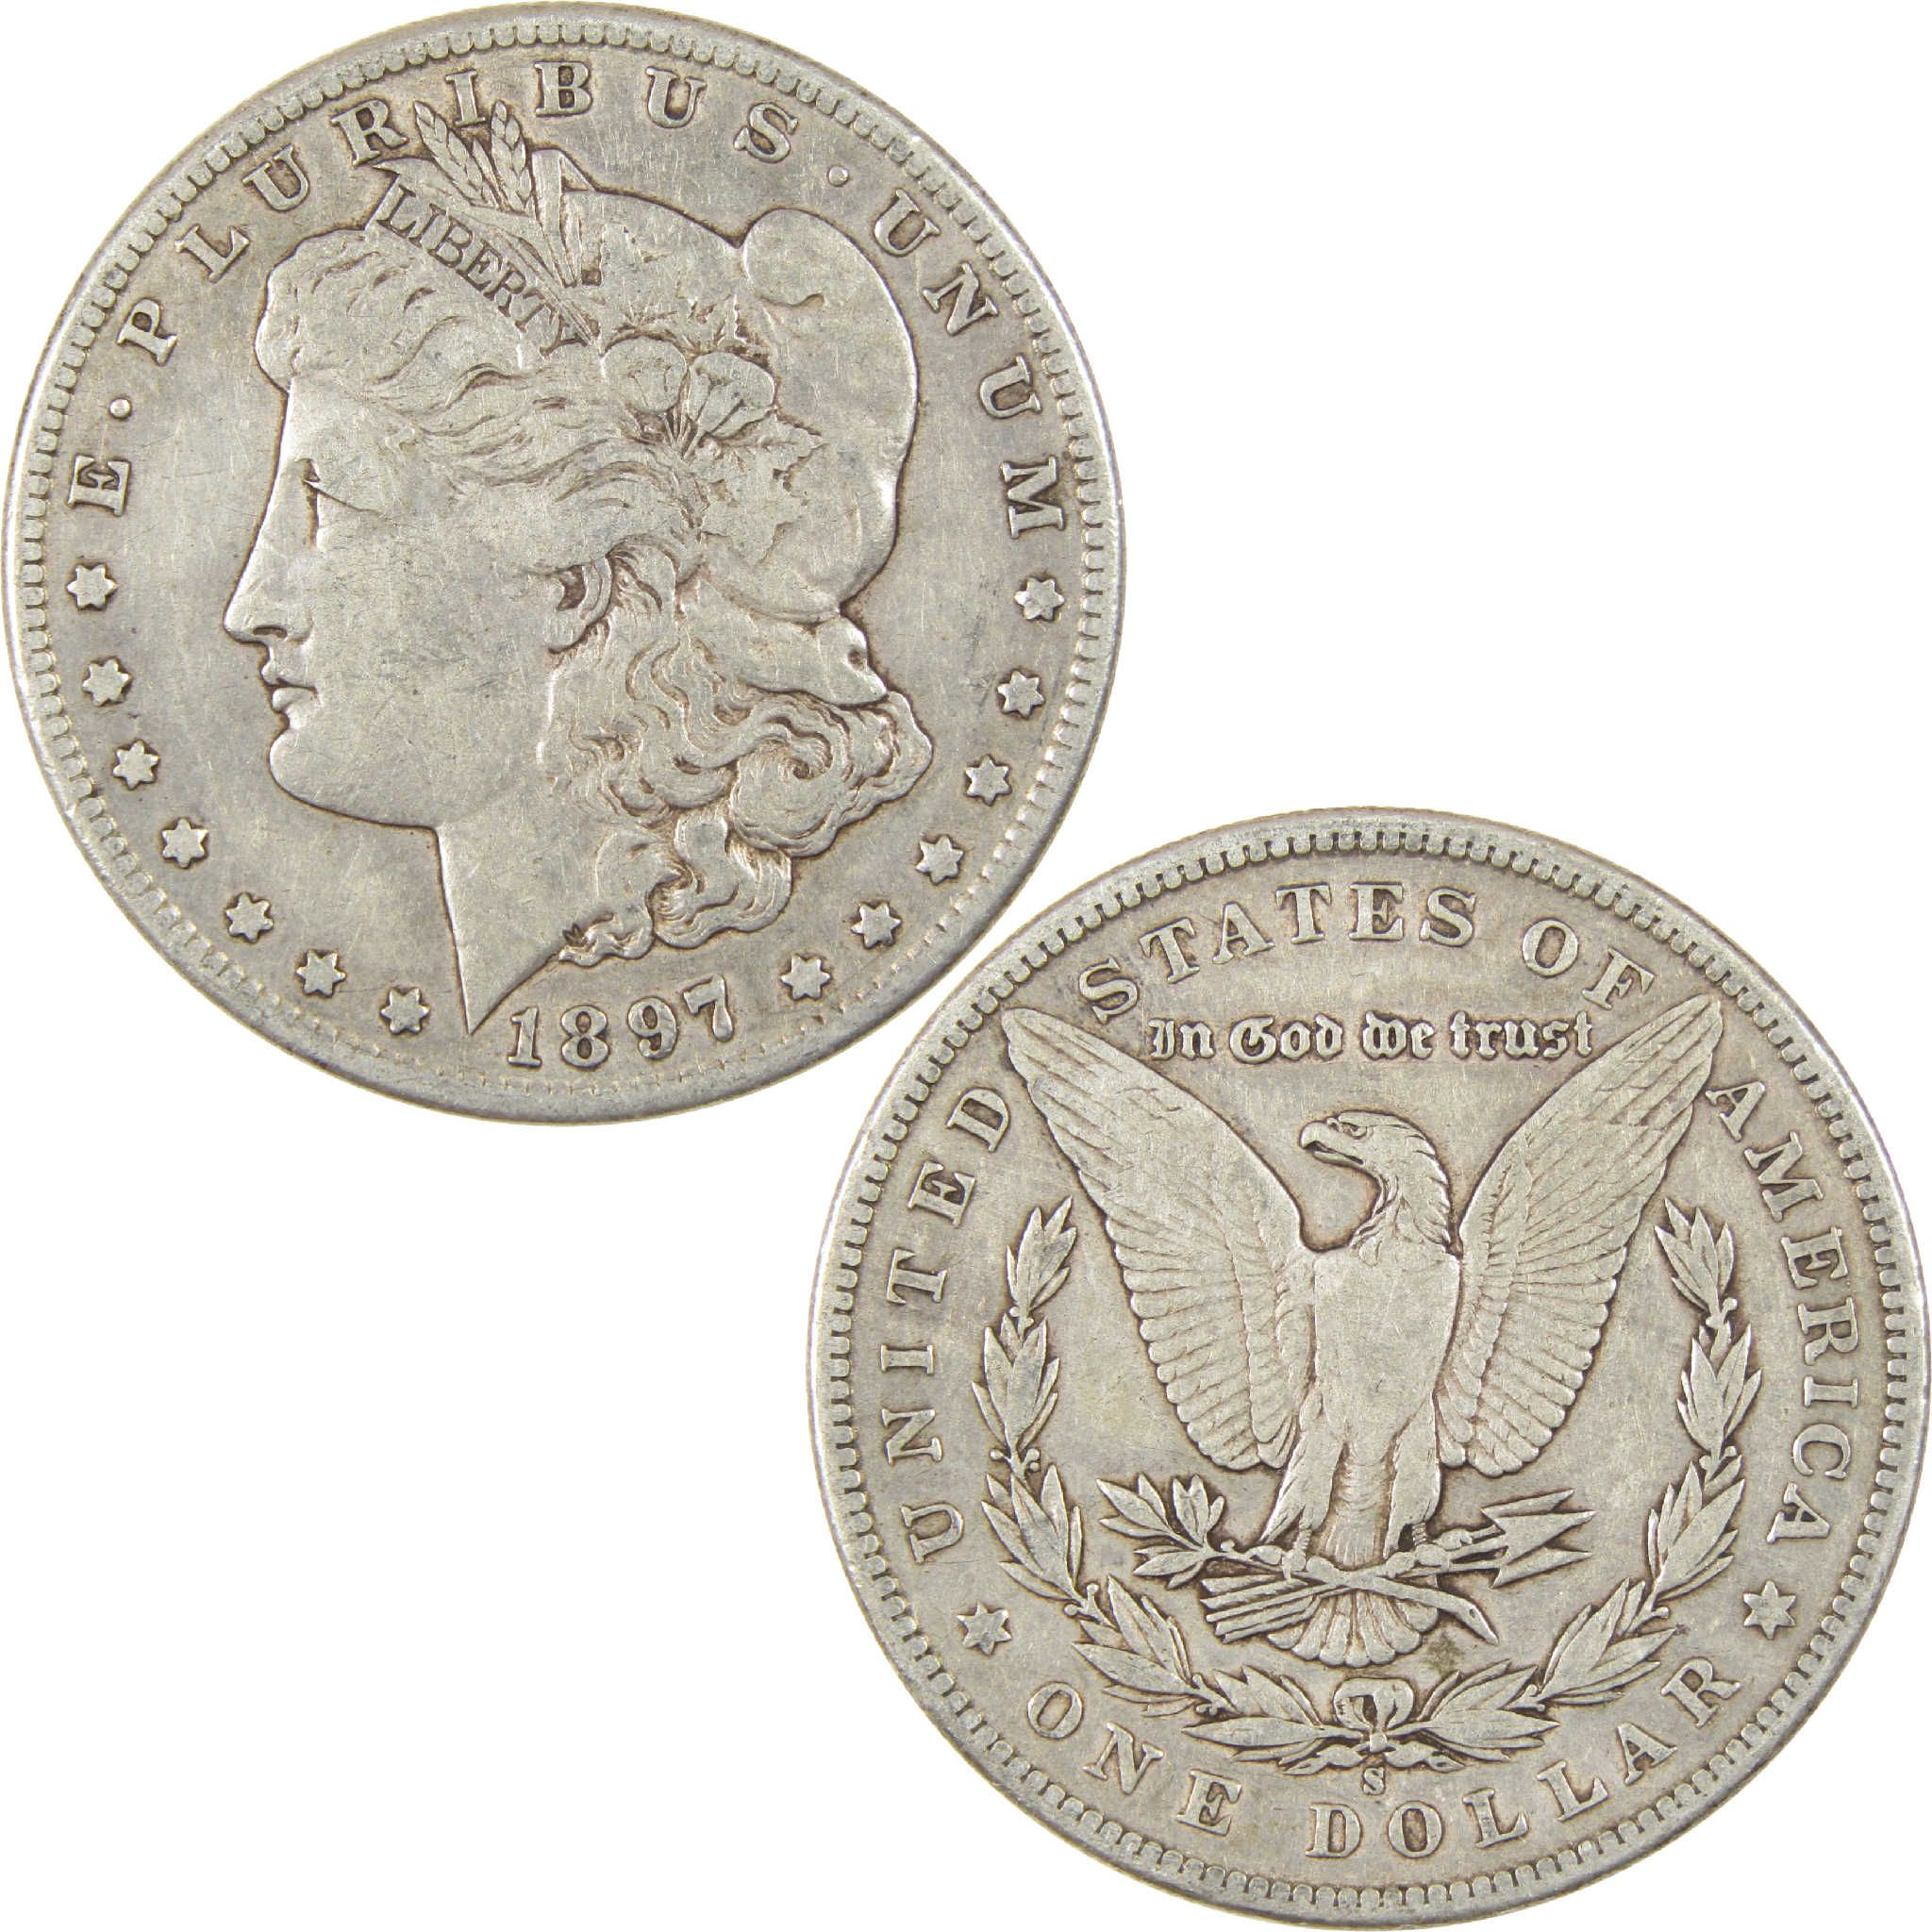 1897 S Morgan Dollar VF Very Fine Silver $1 Coin SKU:I11261 - Morgan coin - Morgan silver dollar - Morgan silver dollar for sale - Profile Coins &amp; Collectibles